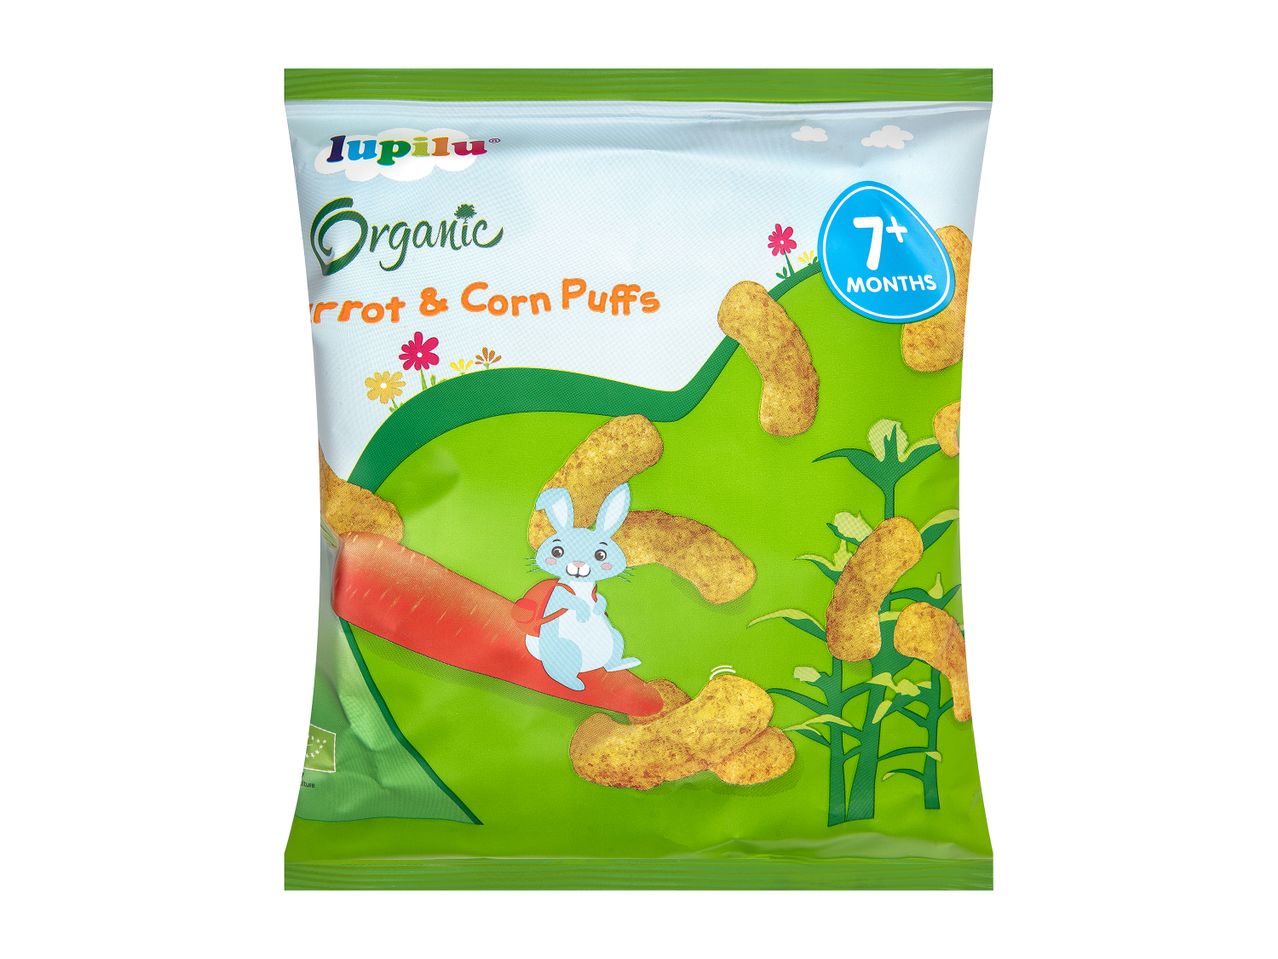 Go to full screen view: Lupilu Organic Carrot Puff Snacks - Image 1